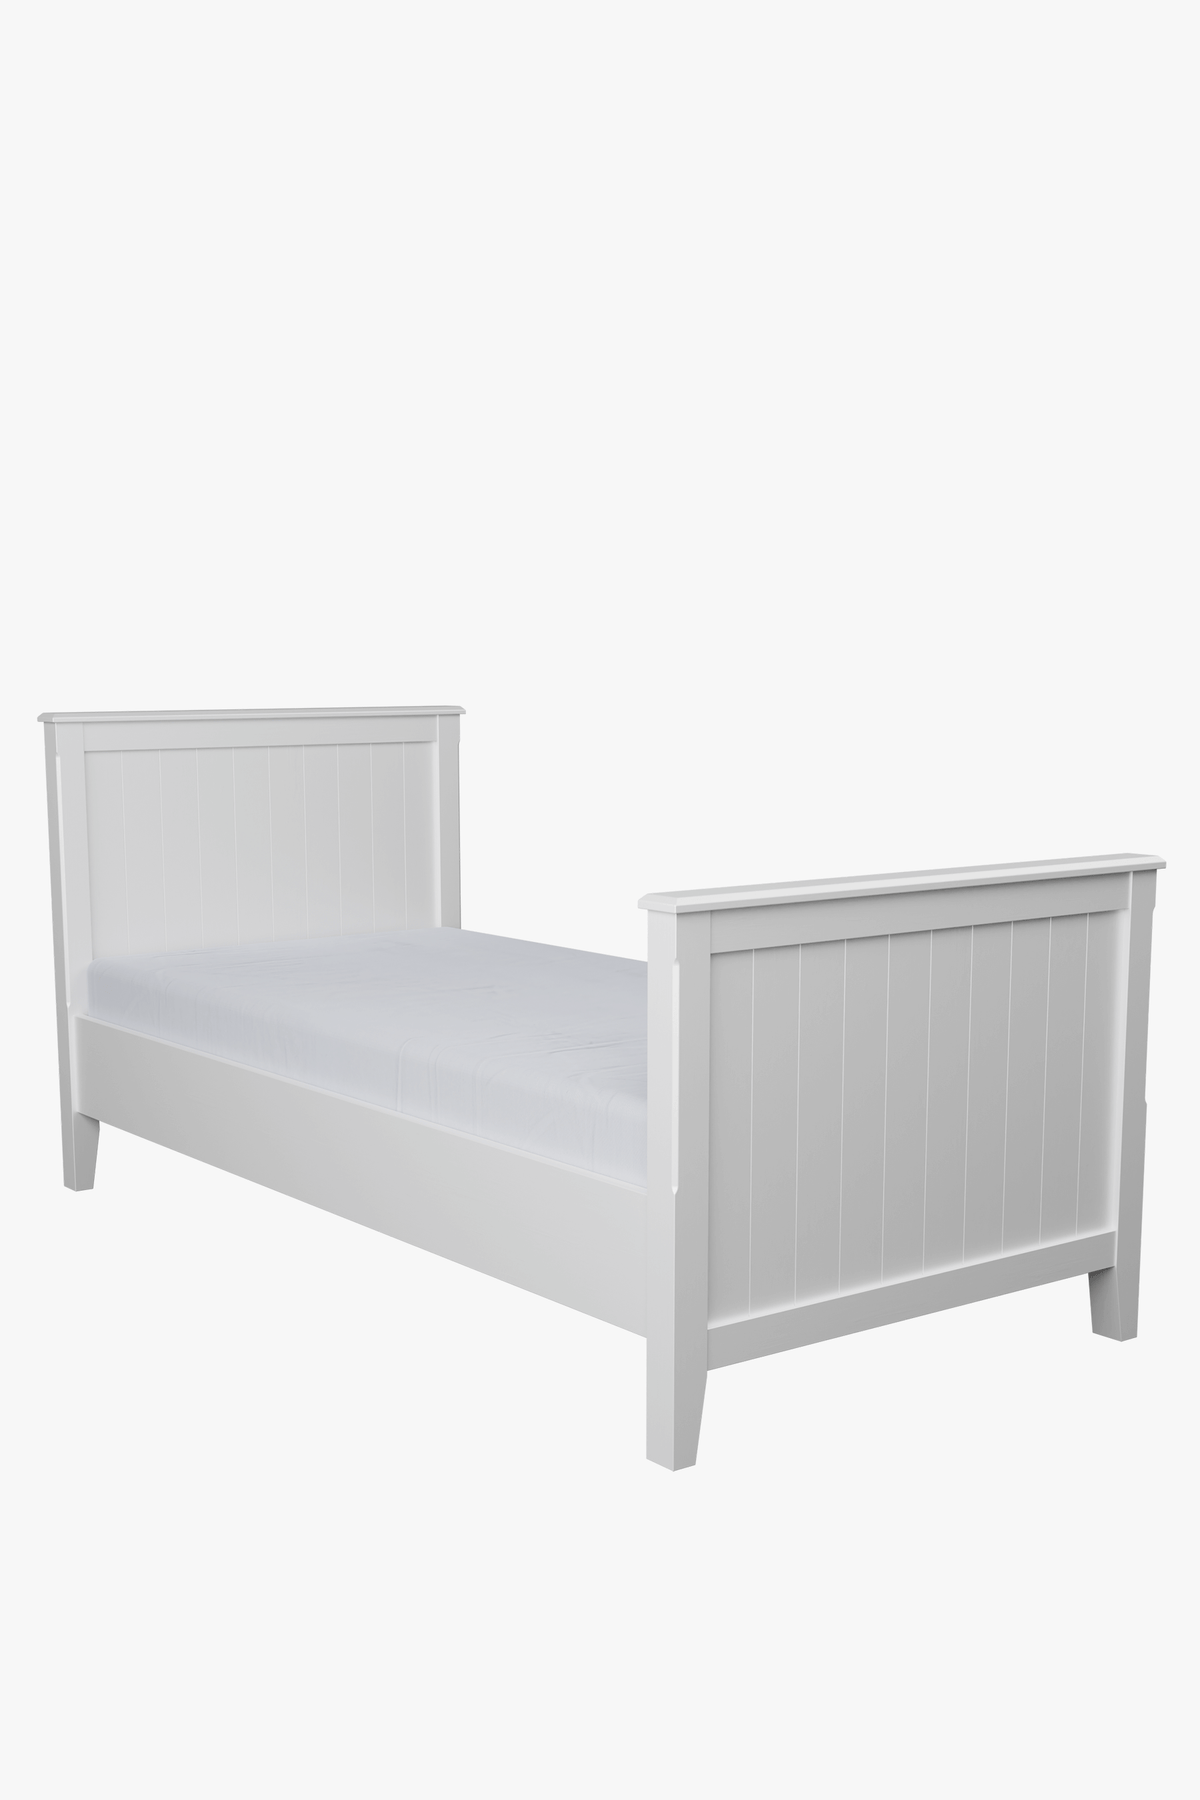 Devon Bed Frame